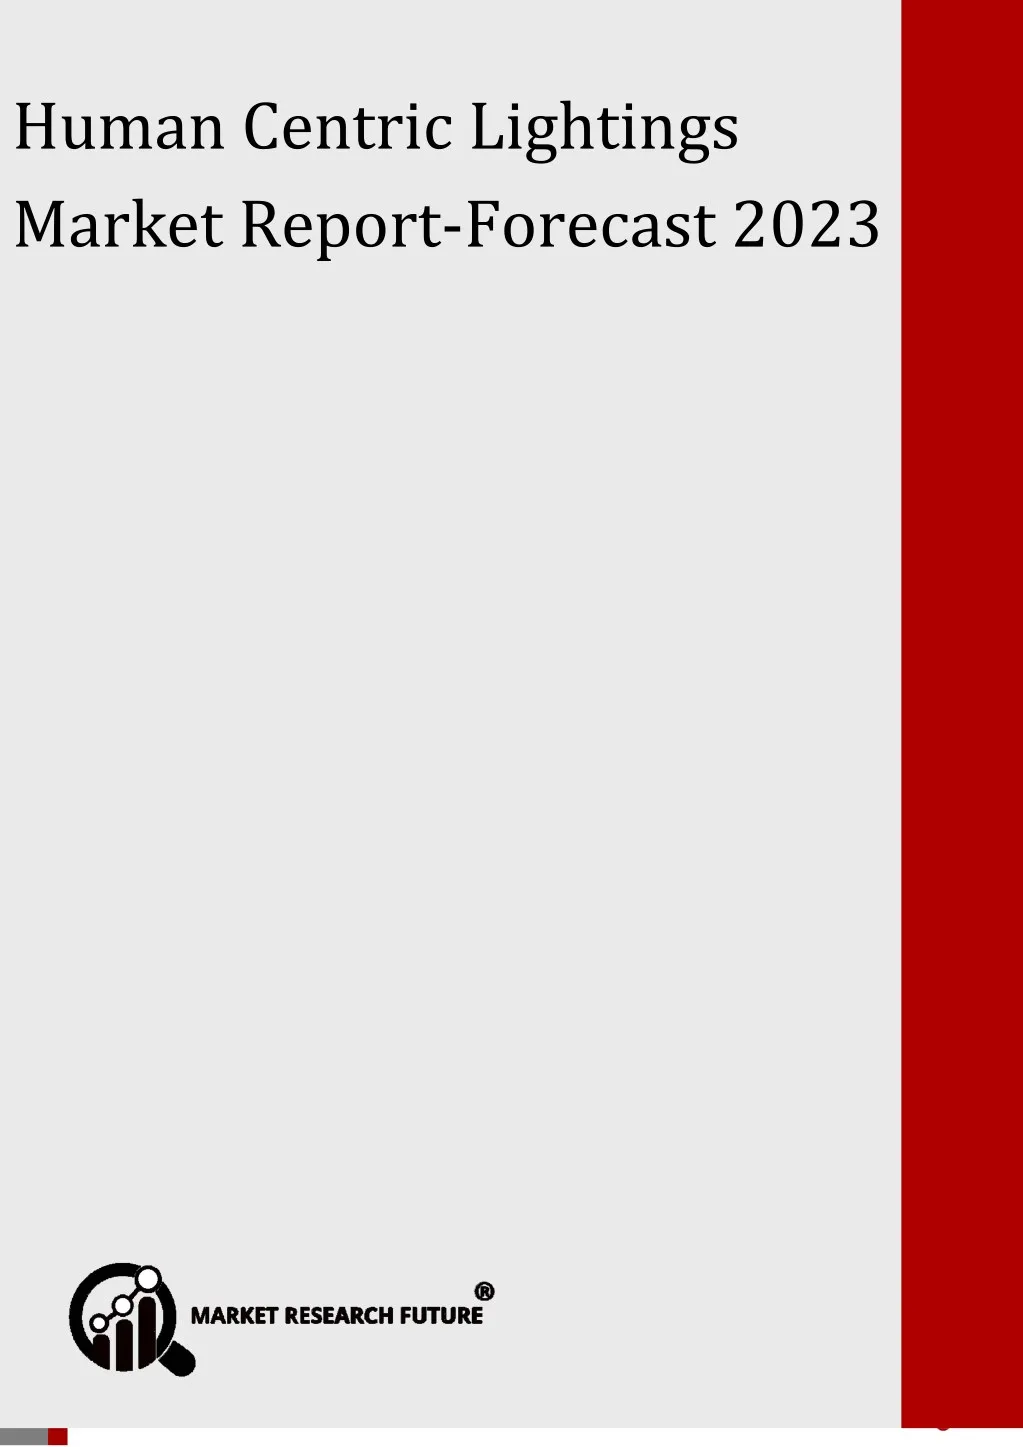 human centric lightings market forecast 2023